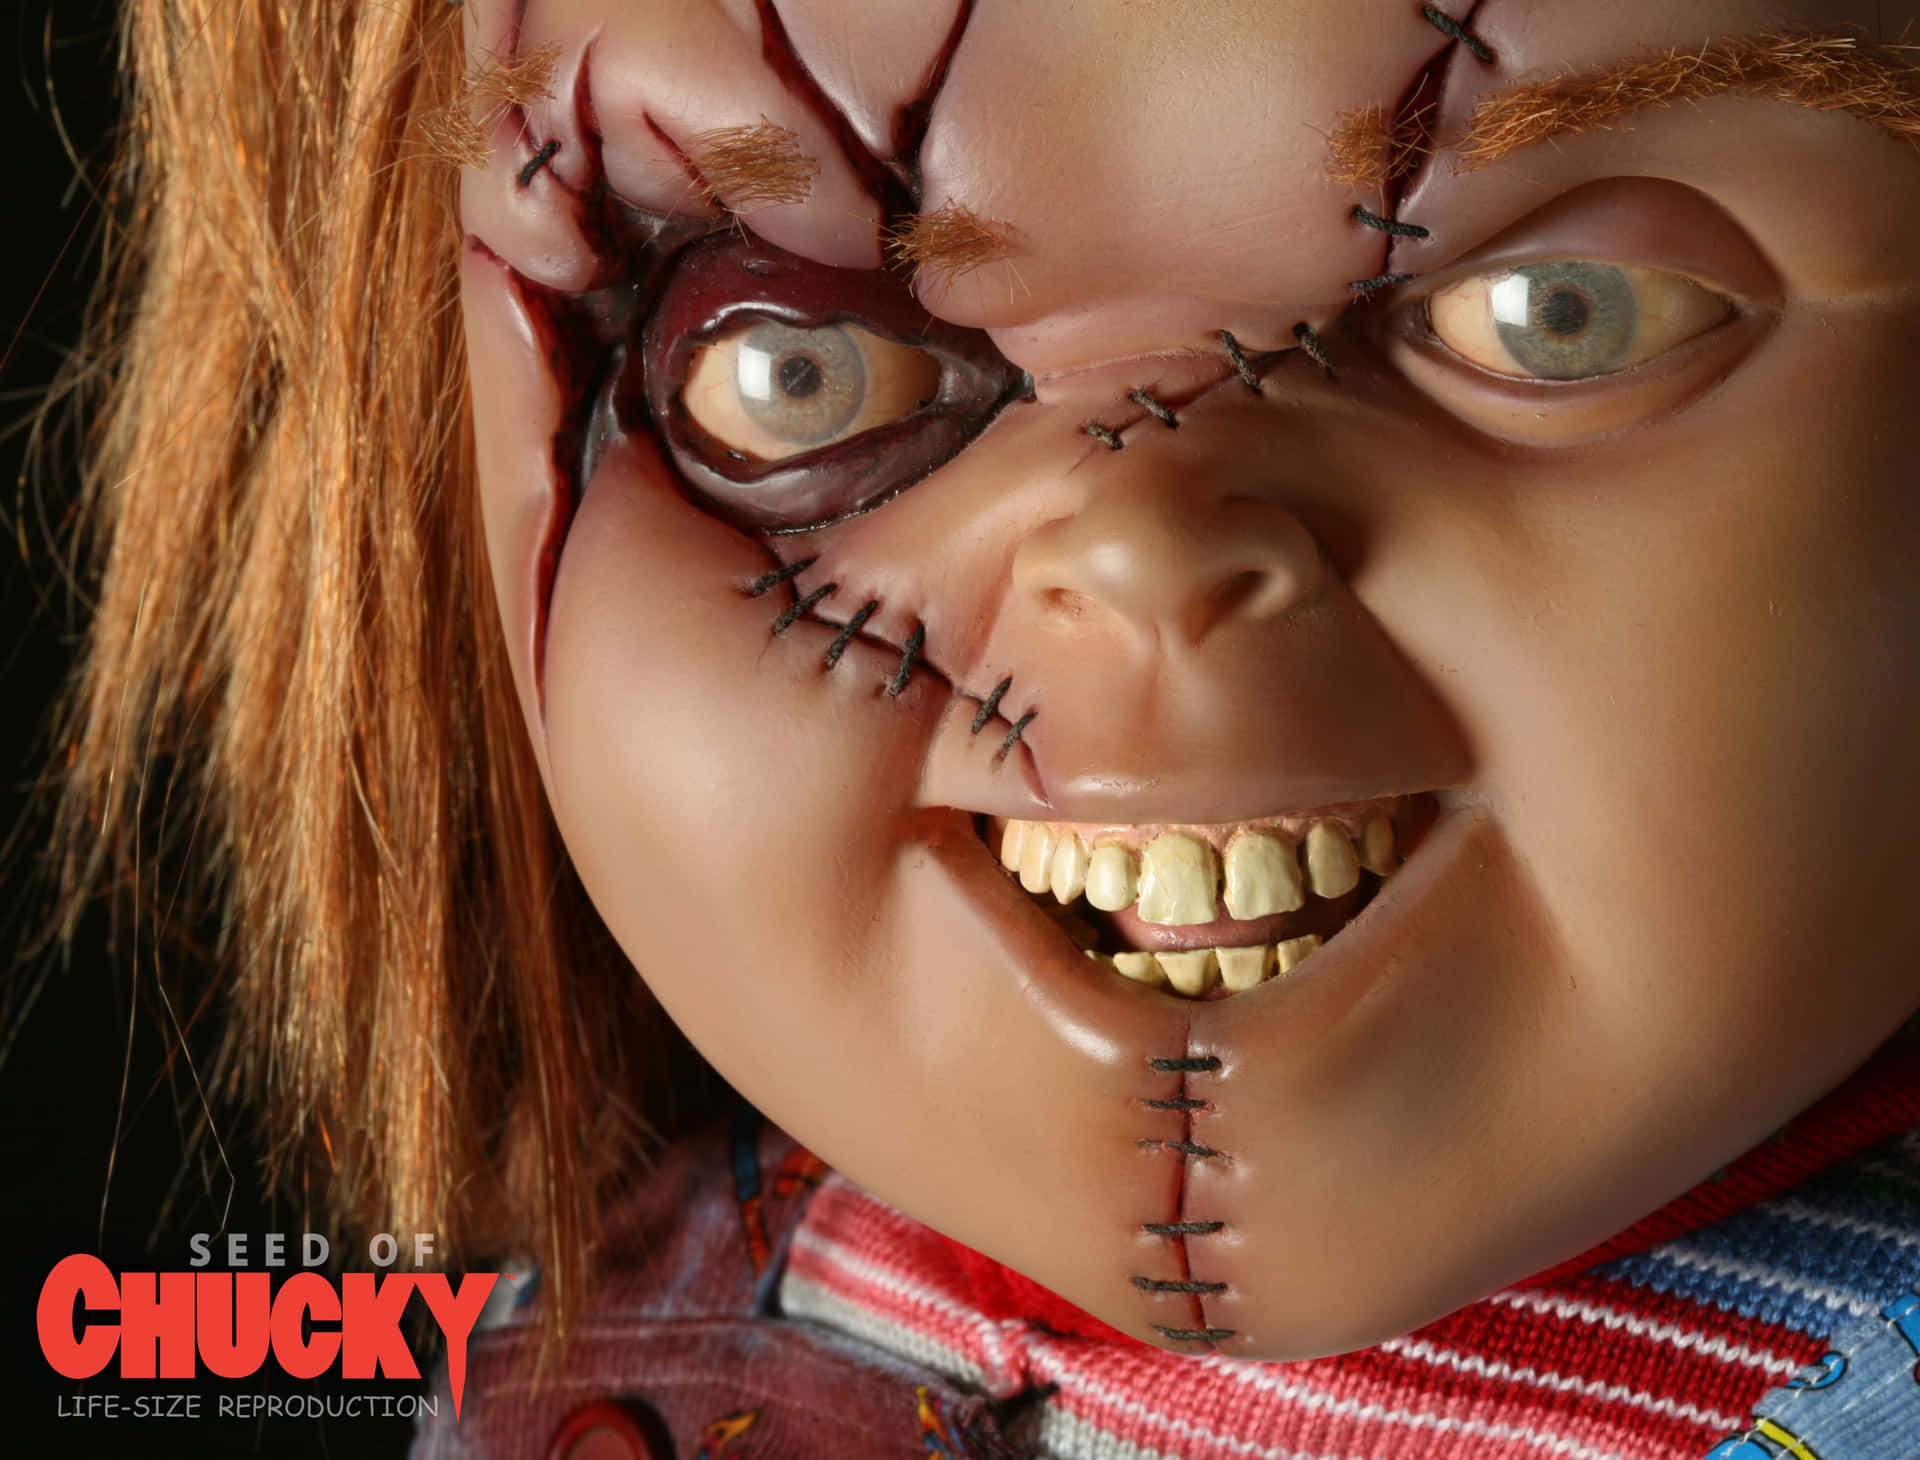 Chucky, den berygtede horrordukke, giver dig kuldegysninger. Wallpaper